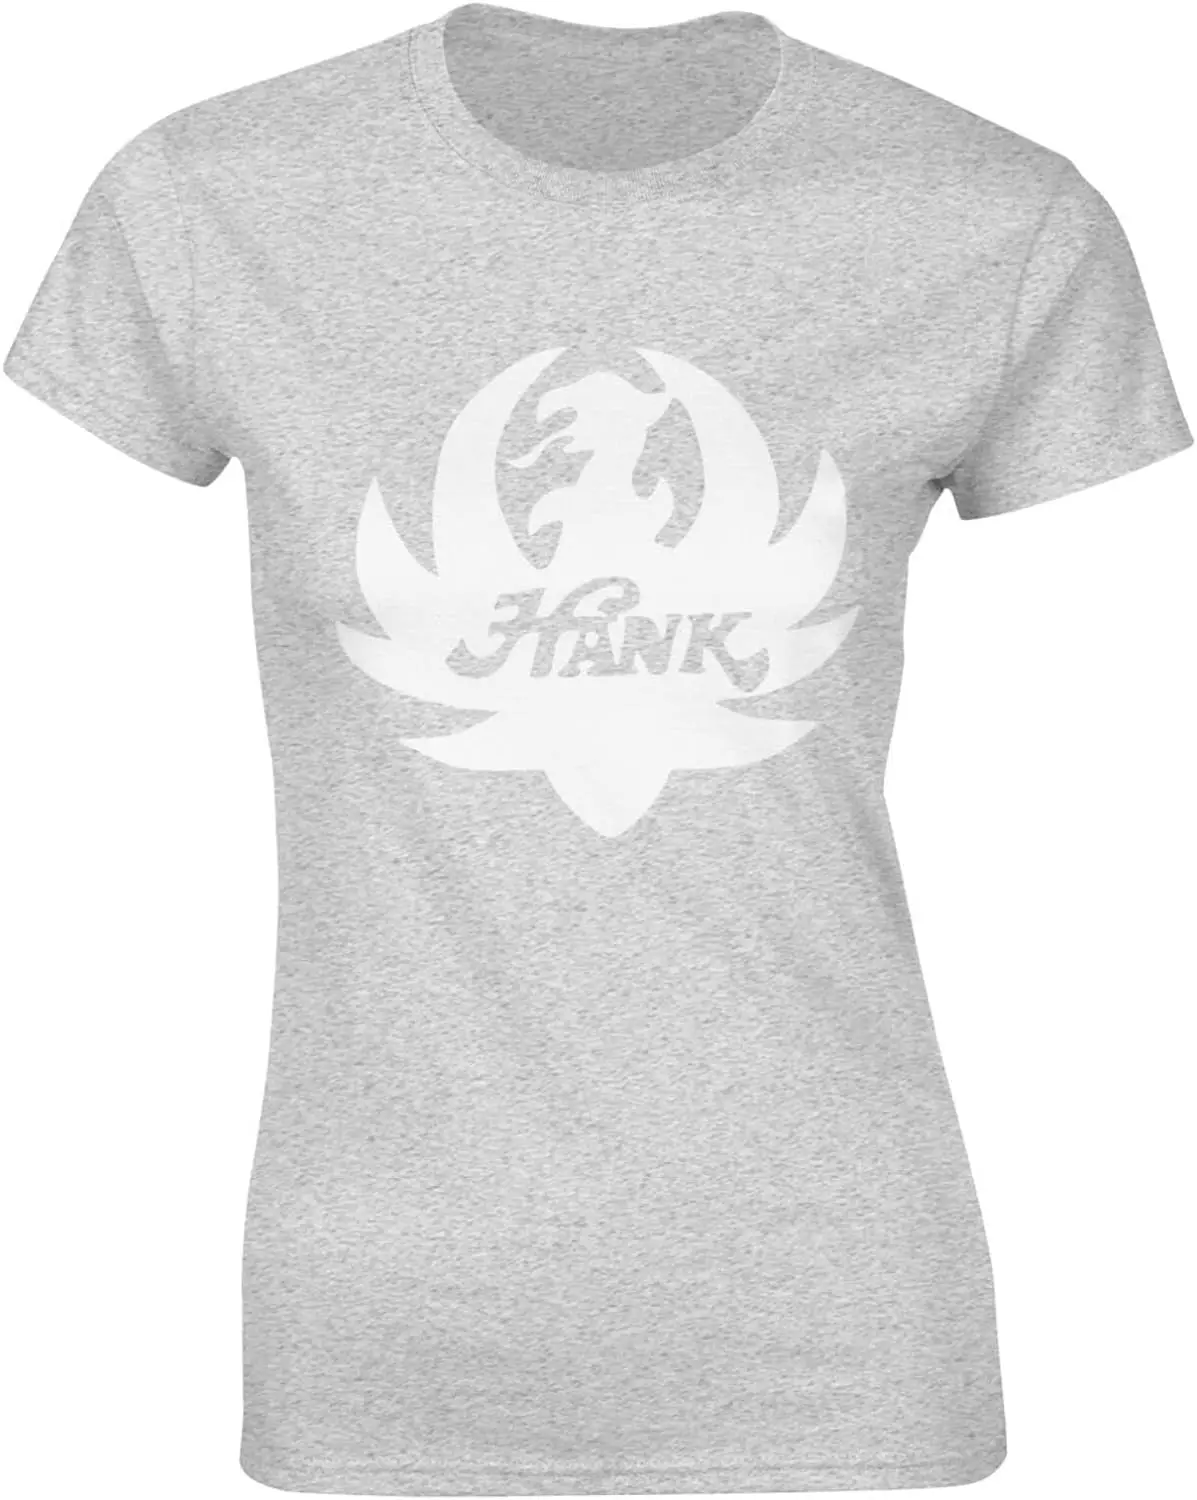 Hank Music Williams Jr Women's Classic Shirt Cotton Crew Neck Casual Top Short Sleeve T-Shirt Black